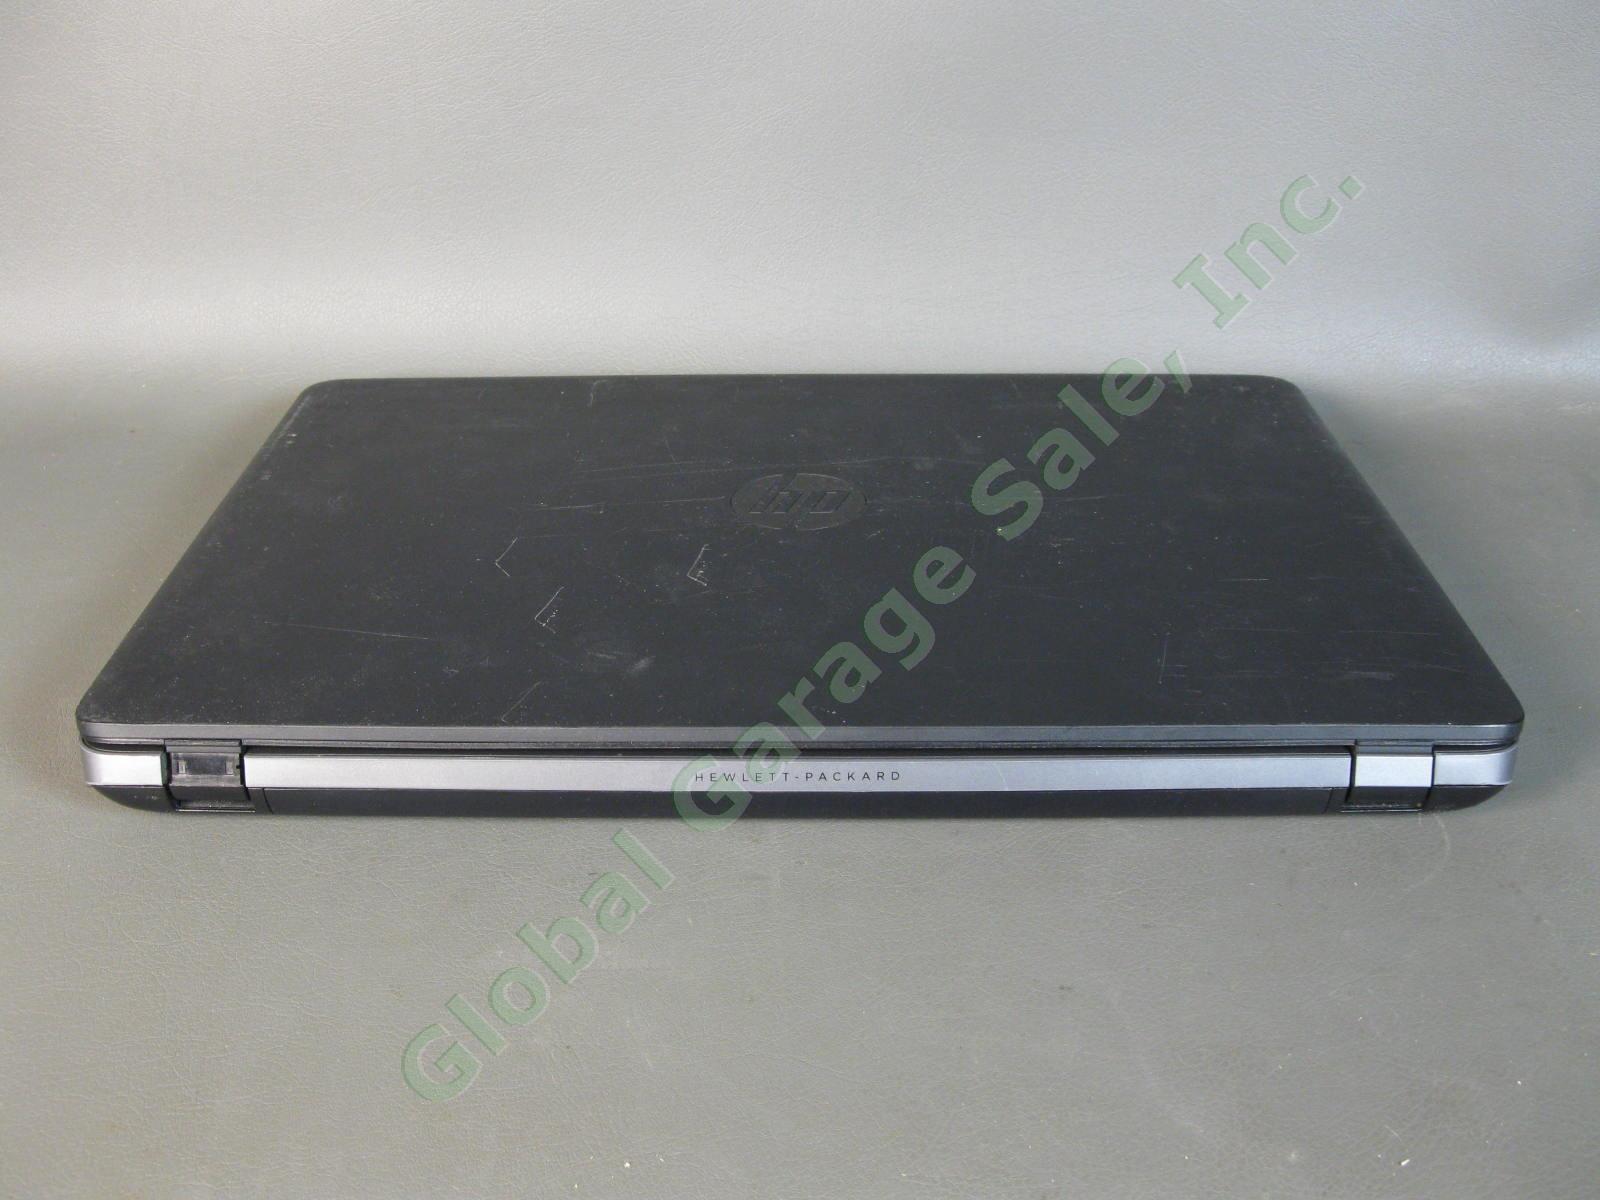 HP ProBook 450 G1 Laptop Computer i5-4200M 4GB 500GB Windows 10 WIFI Webcam READ 5